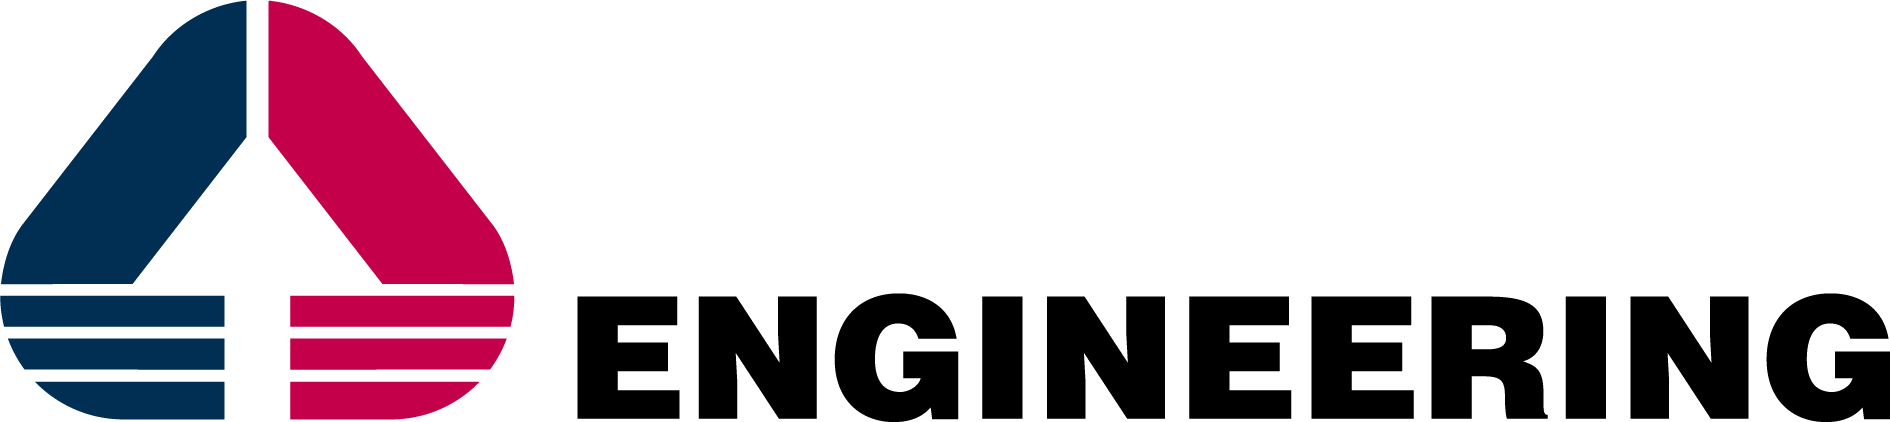 Engineering_logo